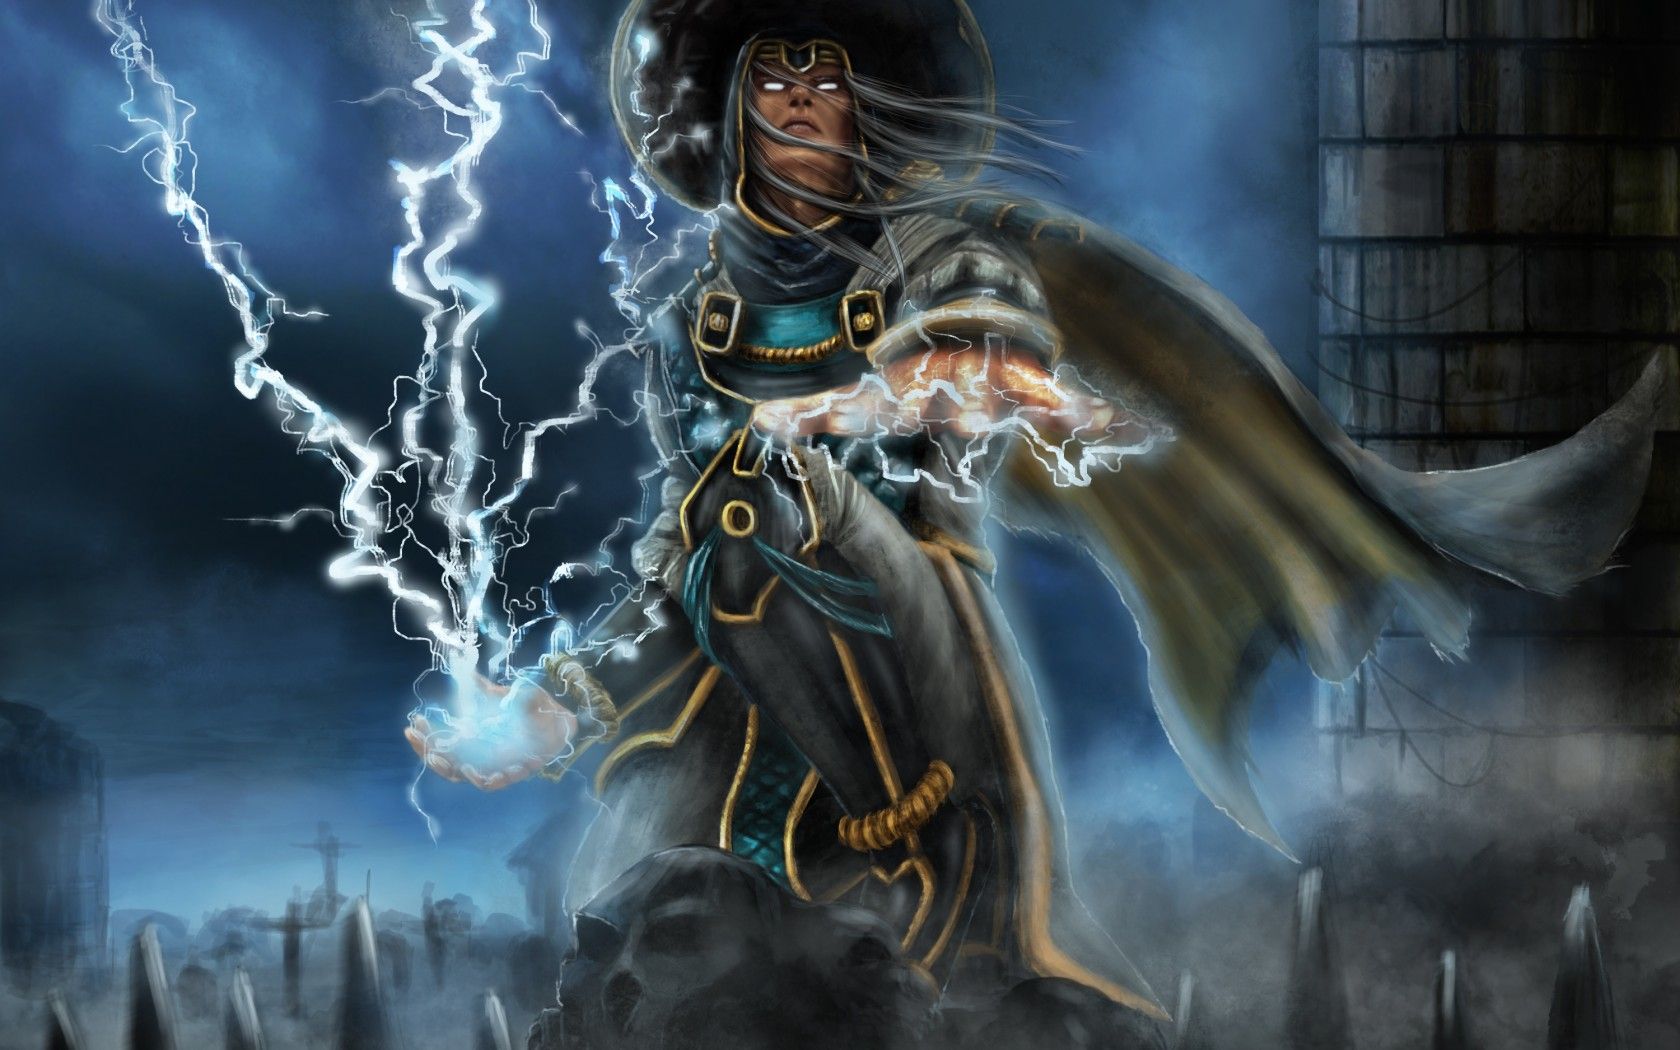 Mortal Kombat wallpaper Raiden and lightning Mortal Kombat games, fan site!